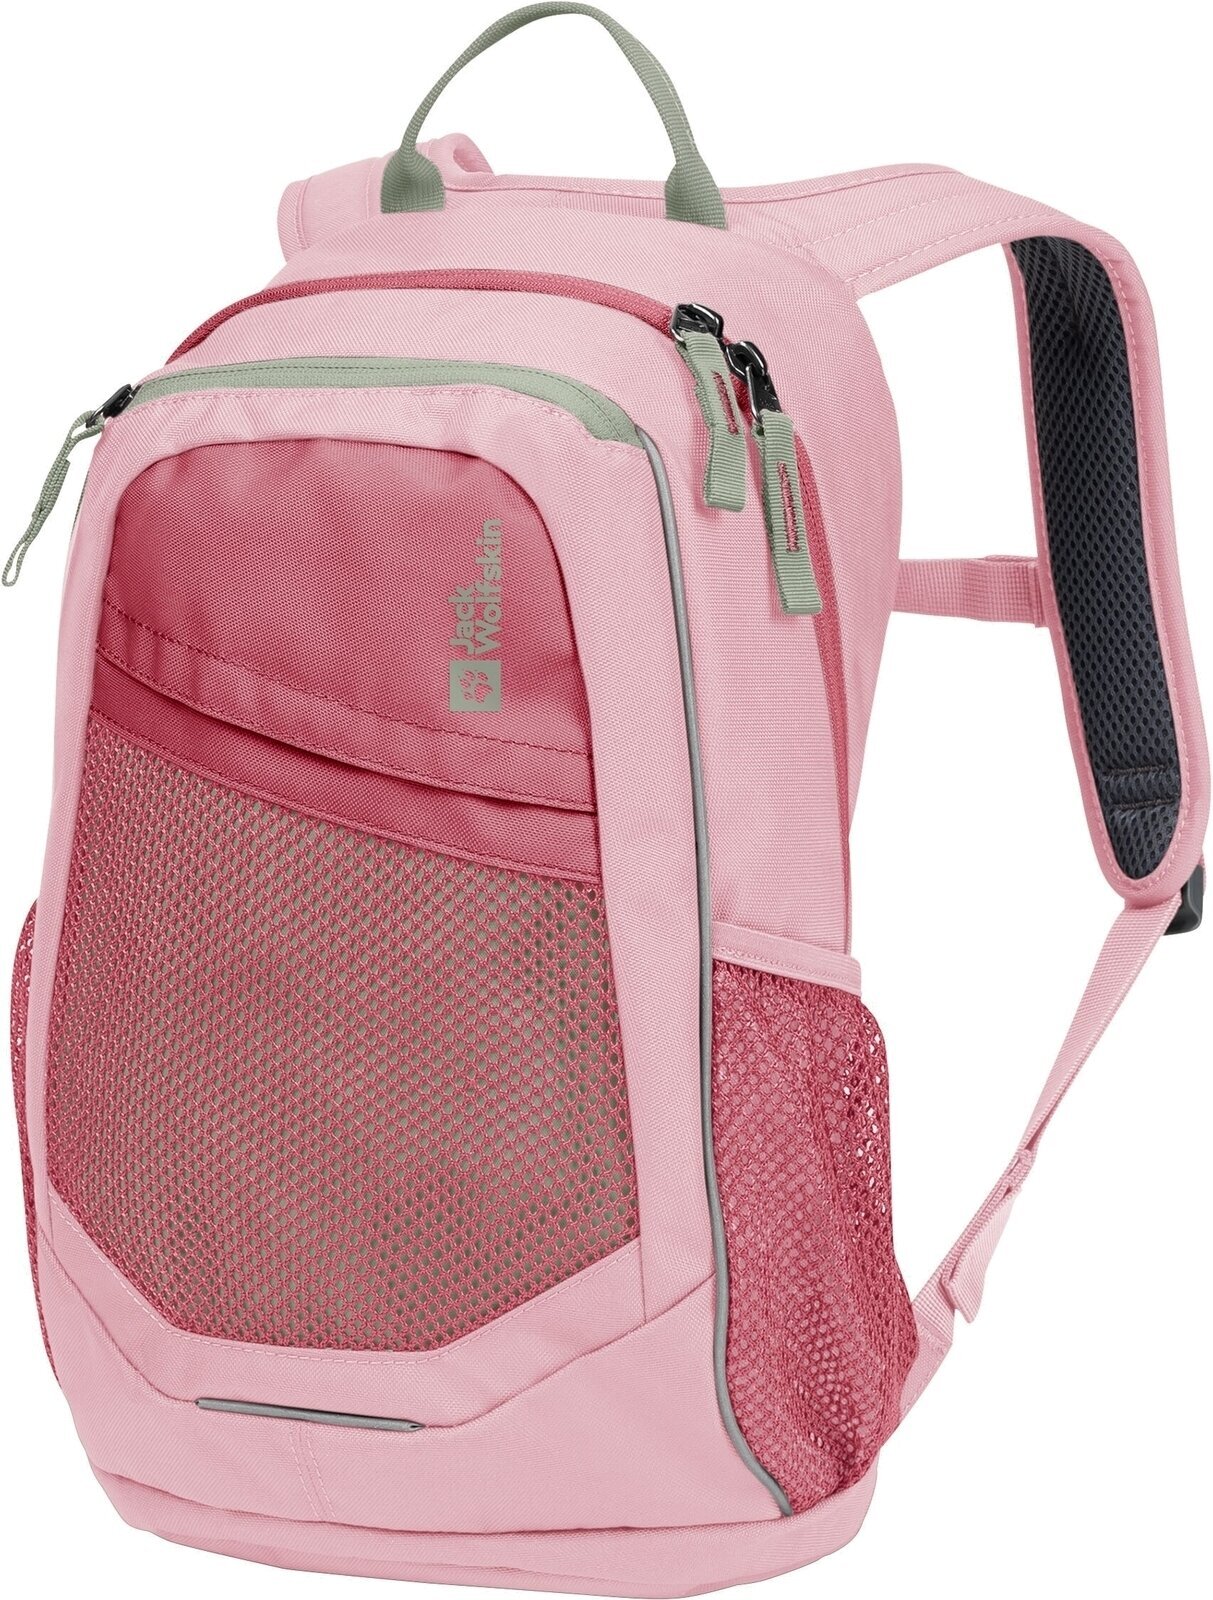 Outdoor Backpack Jack Wolfskin Track Jack Soft Pink One Size Outdoor Backpack